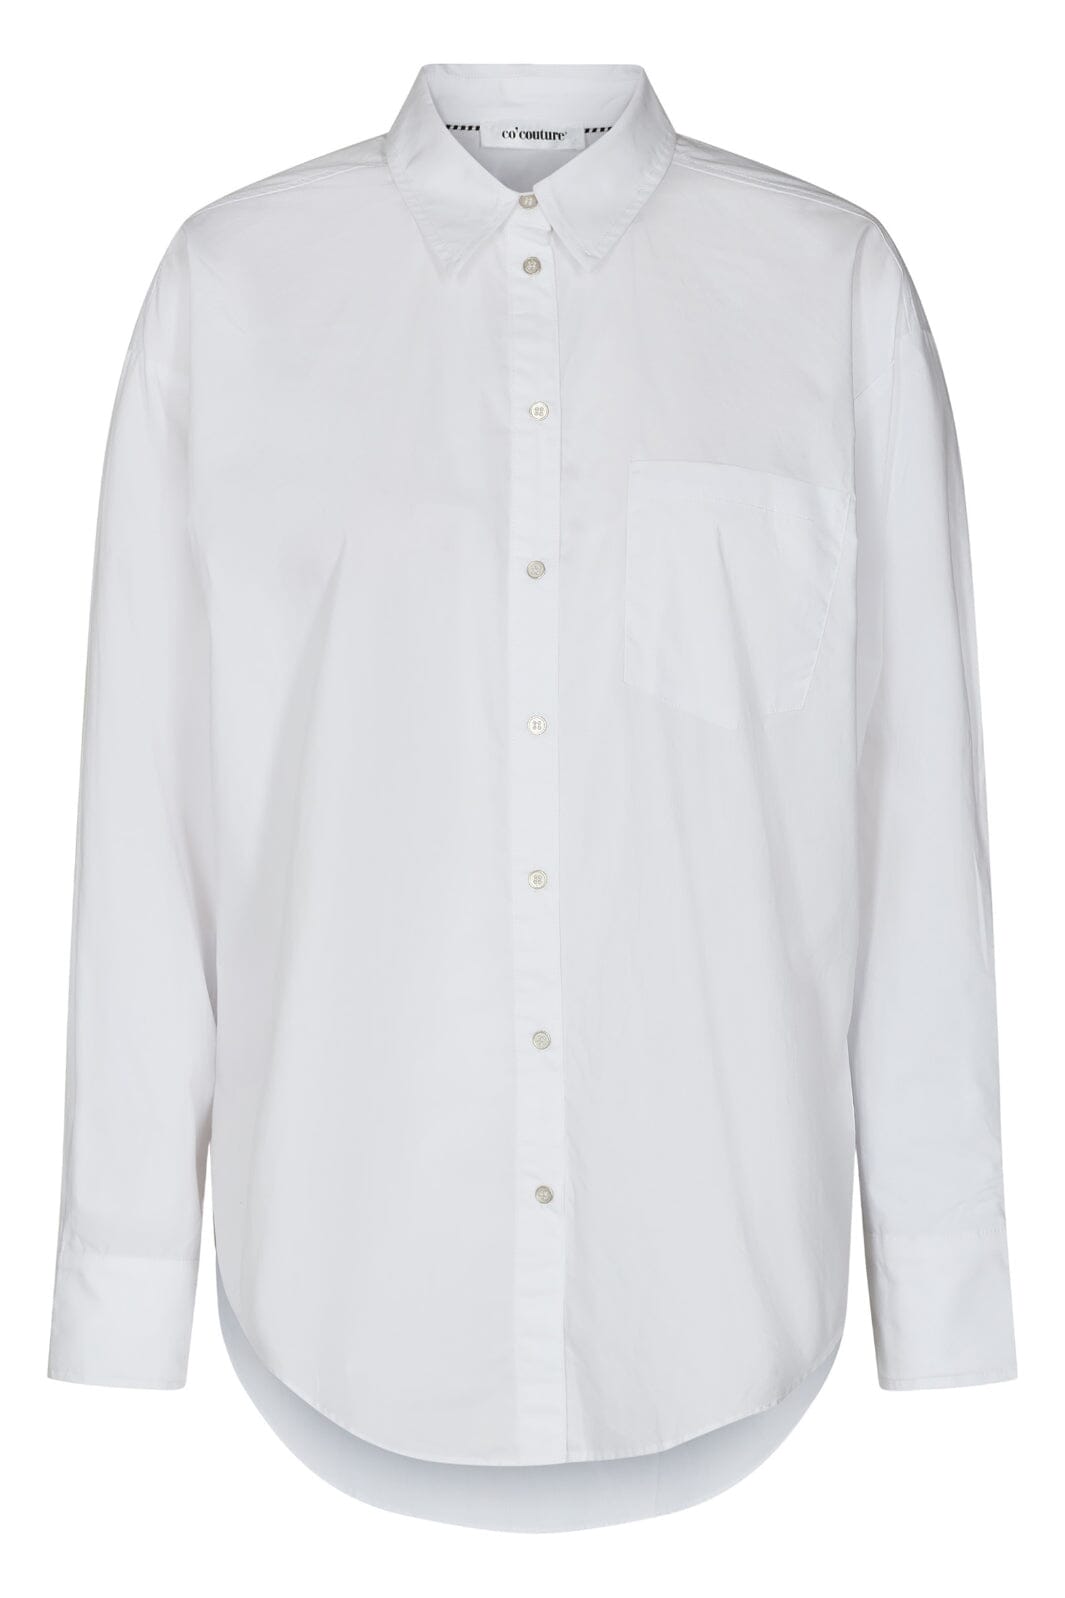 Co´couture - Corioliscc Oversize Shirt 95522 - 4000 White Skjorter 